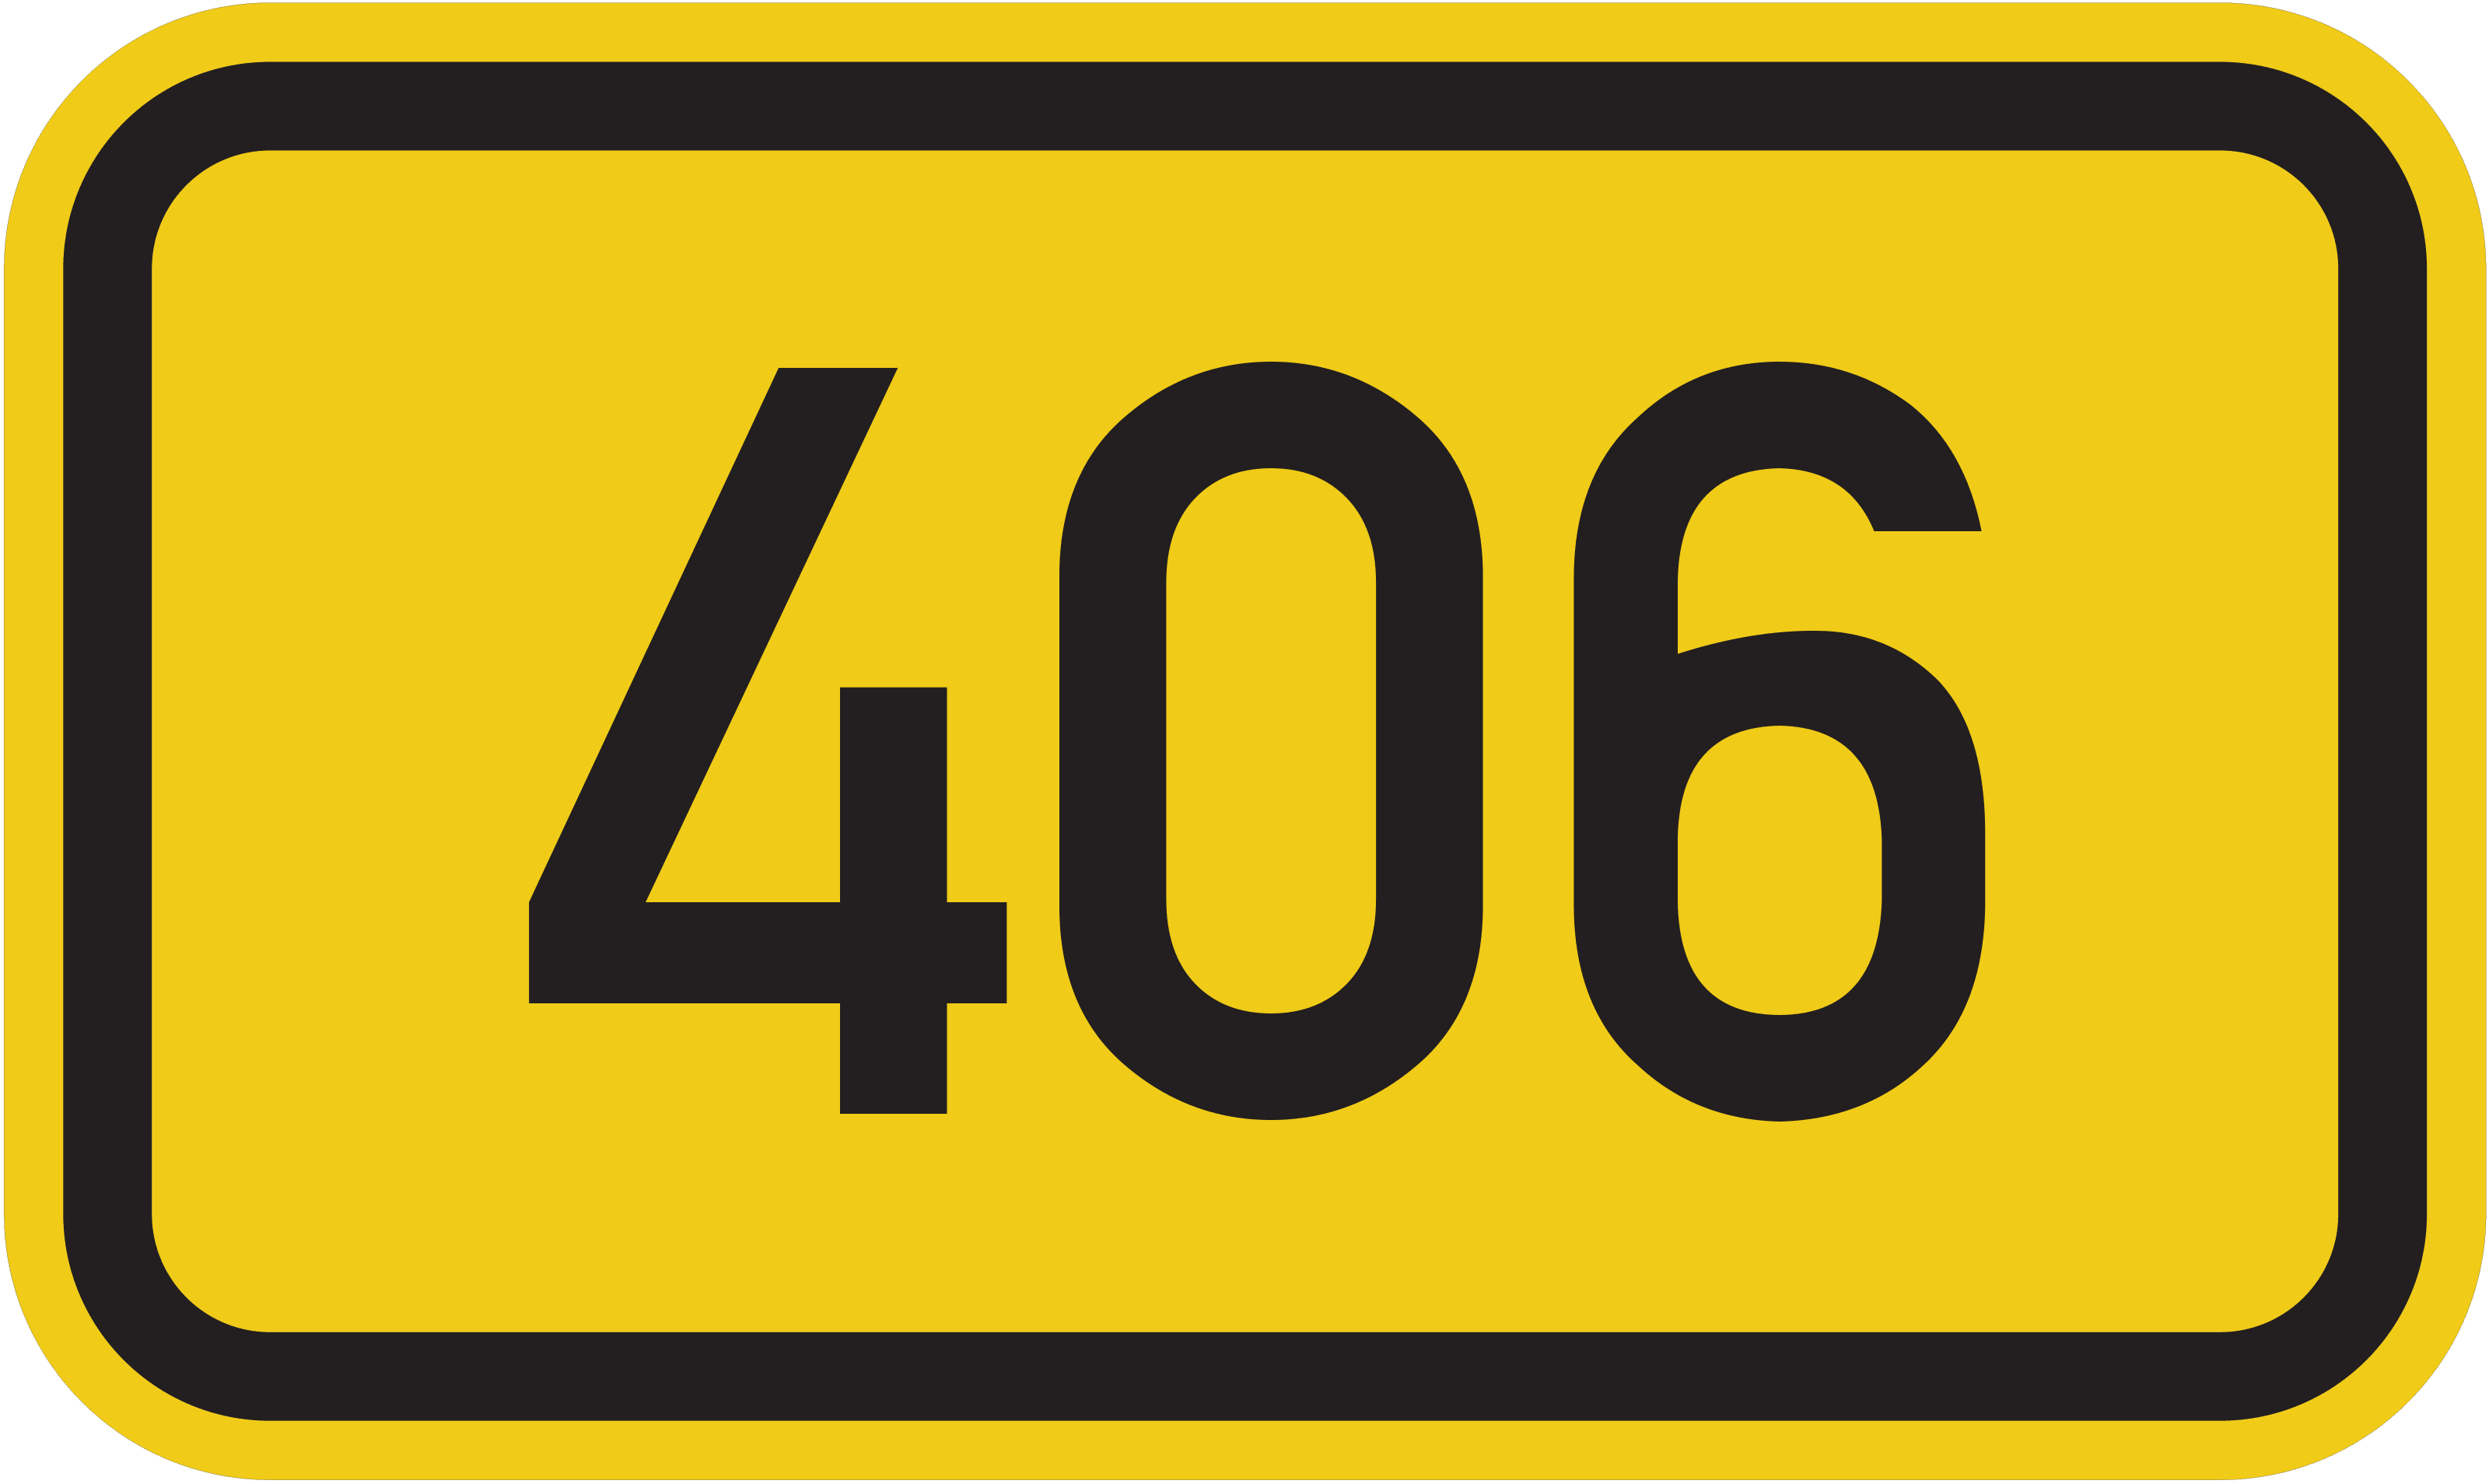 Straßenschild Bundesstraße 406